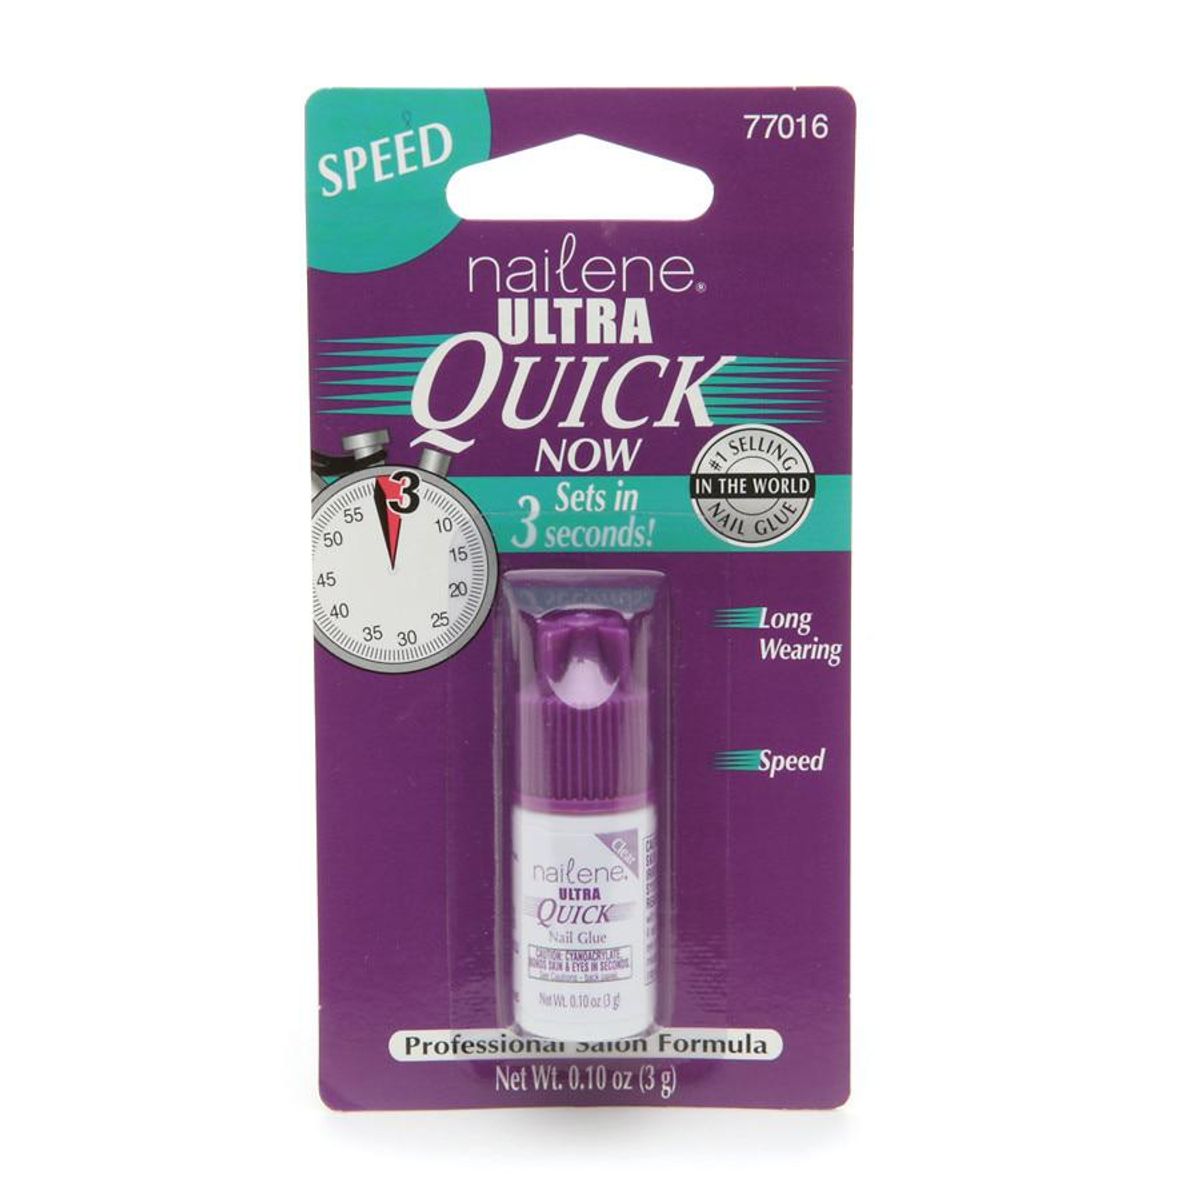 nailene ultra quick nail glue